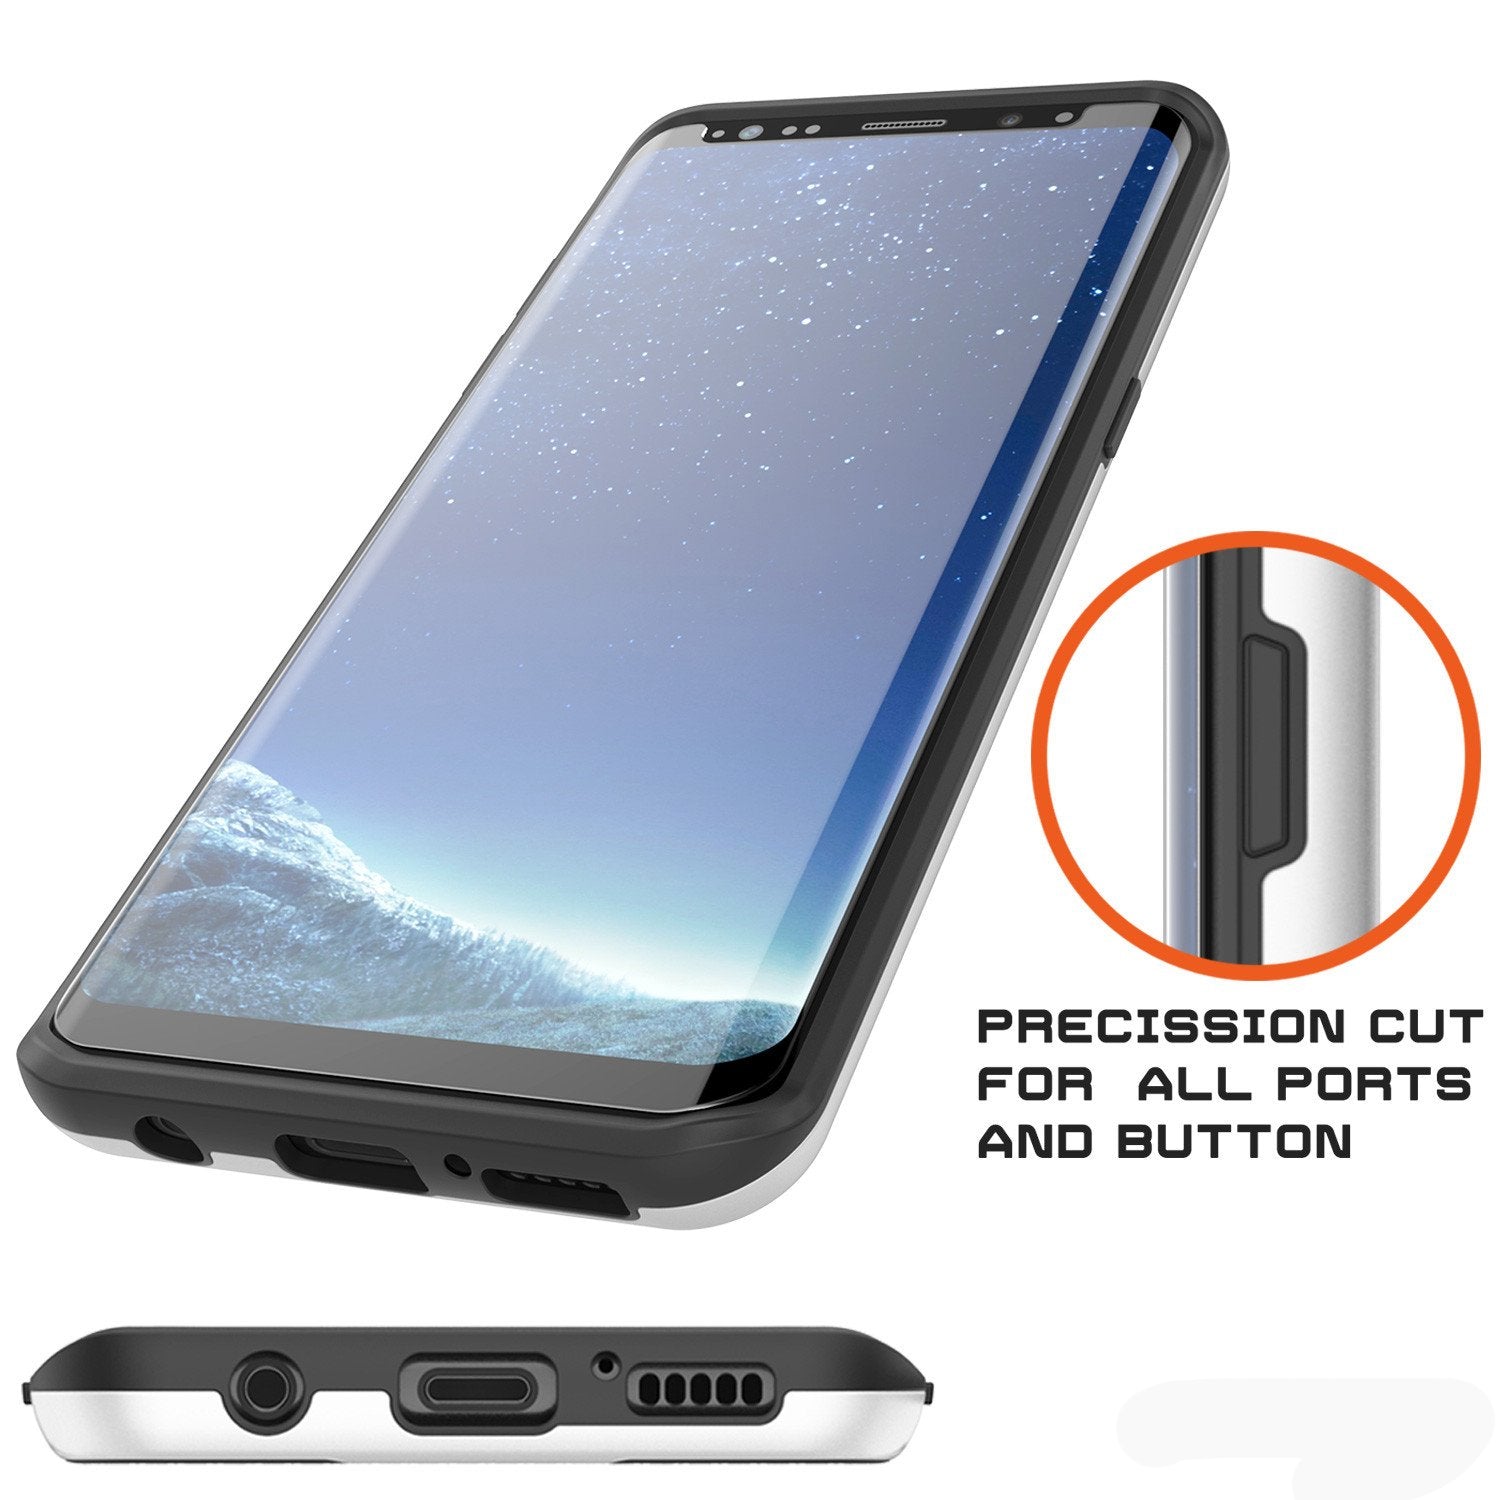 Galaxy S8 Case, PUNKcase [SLOT Series] [Slim Fit] [White]